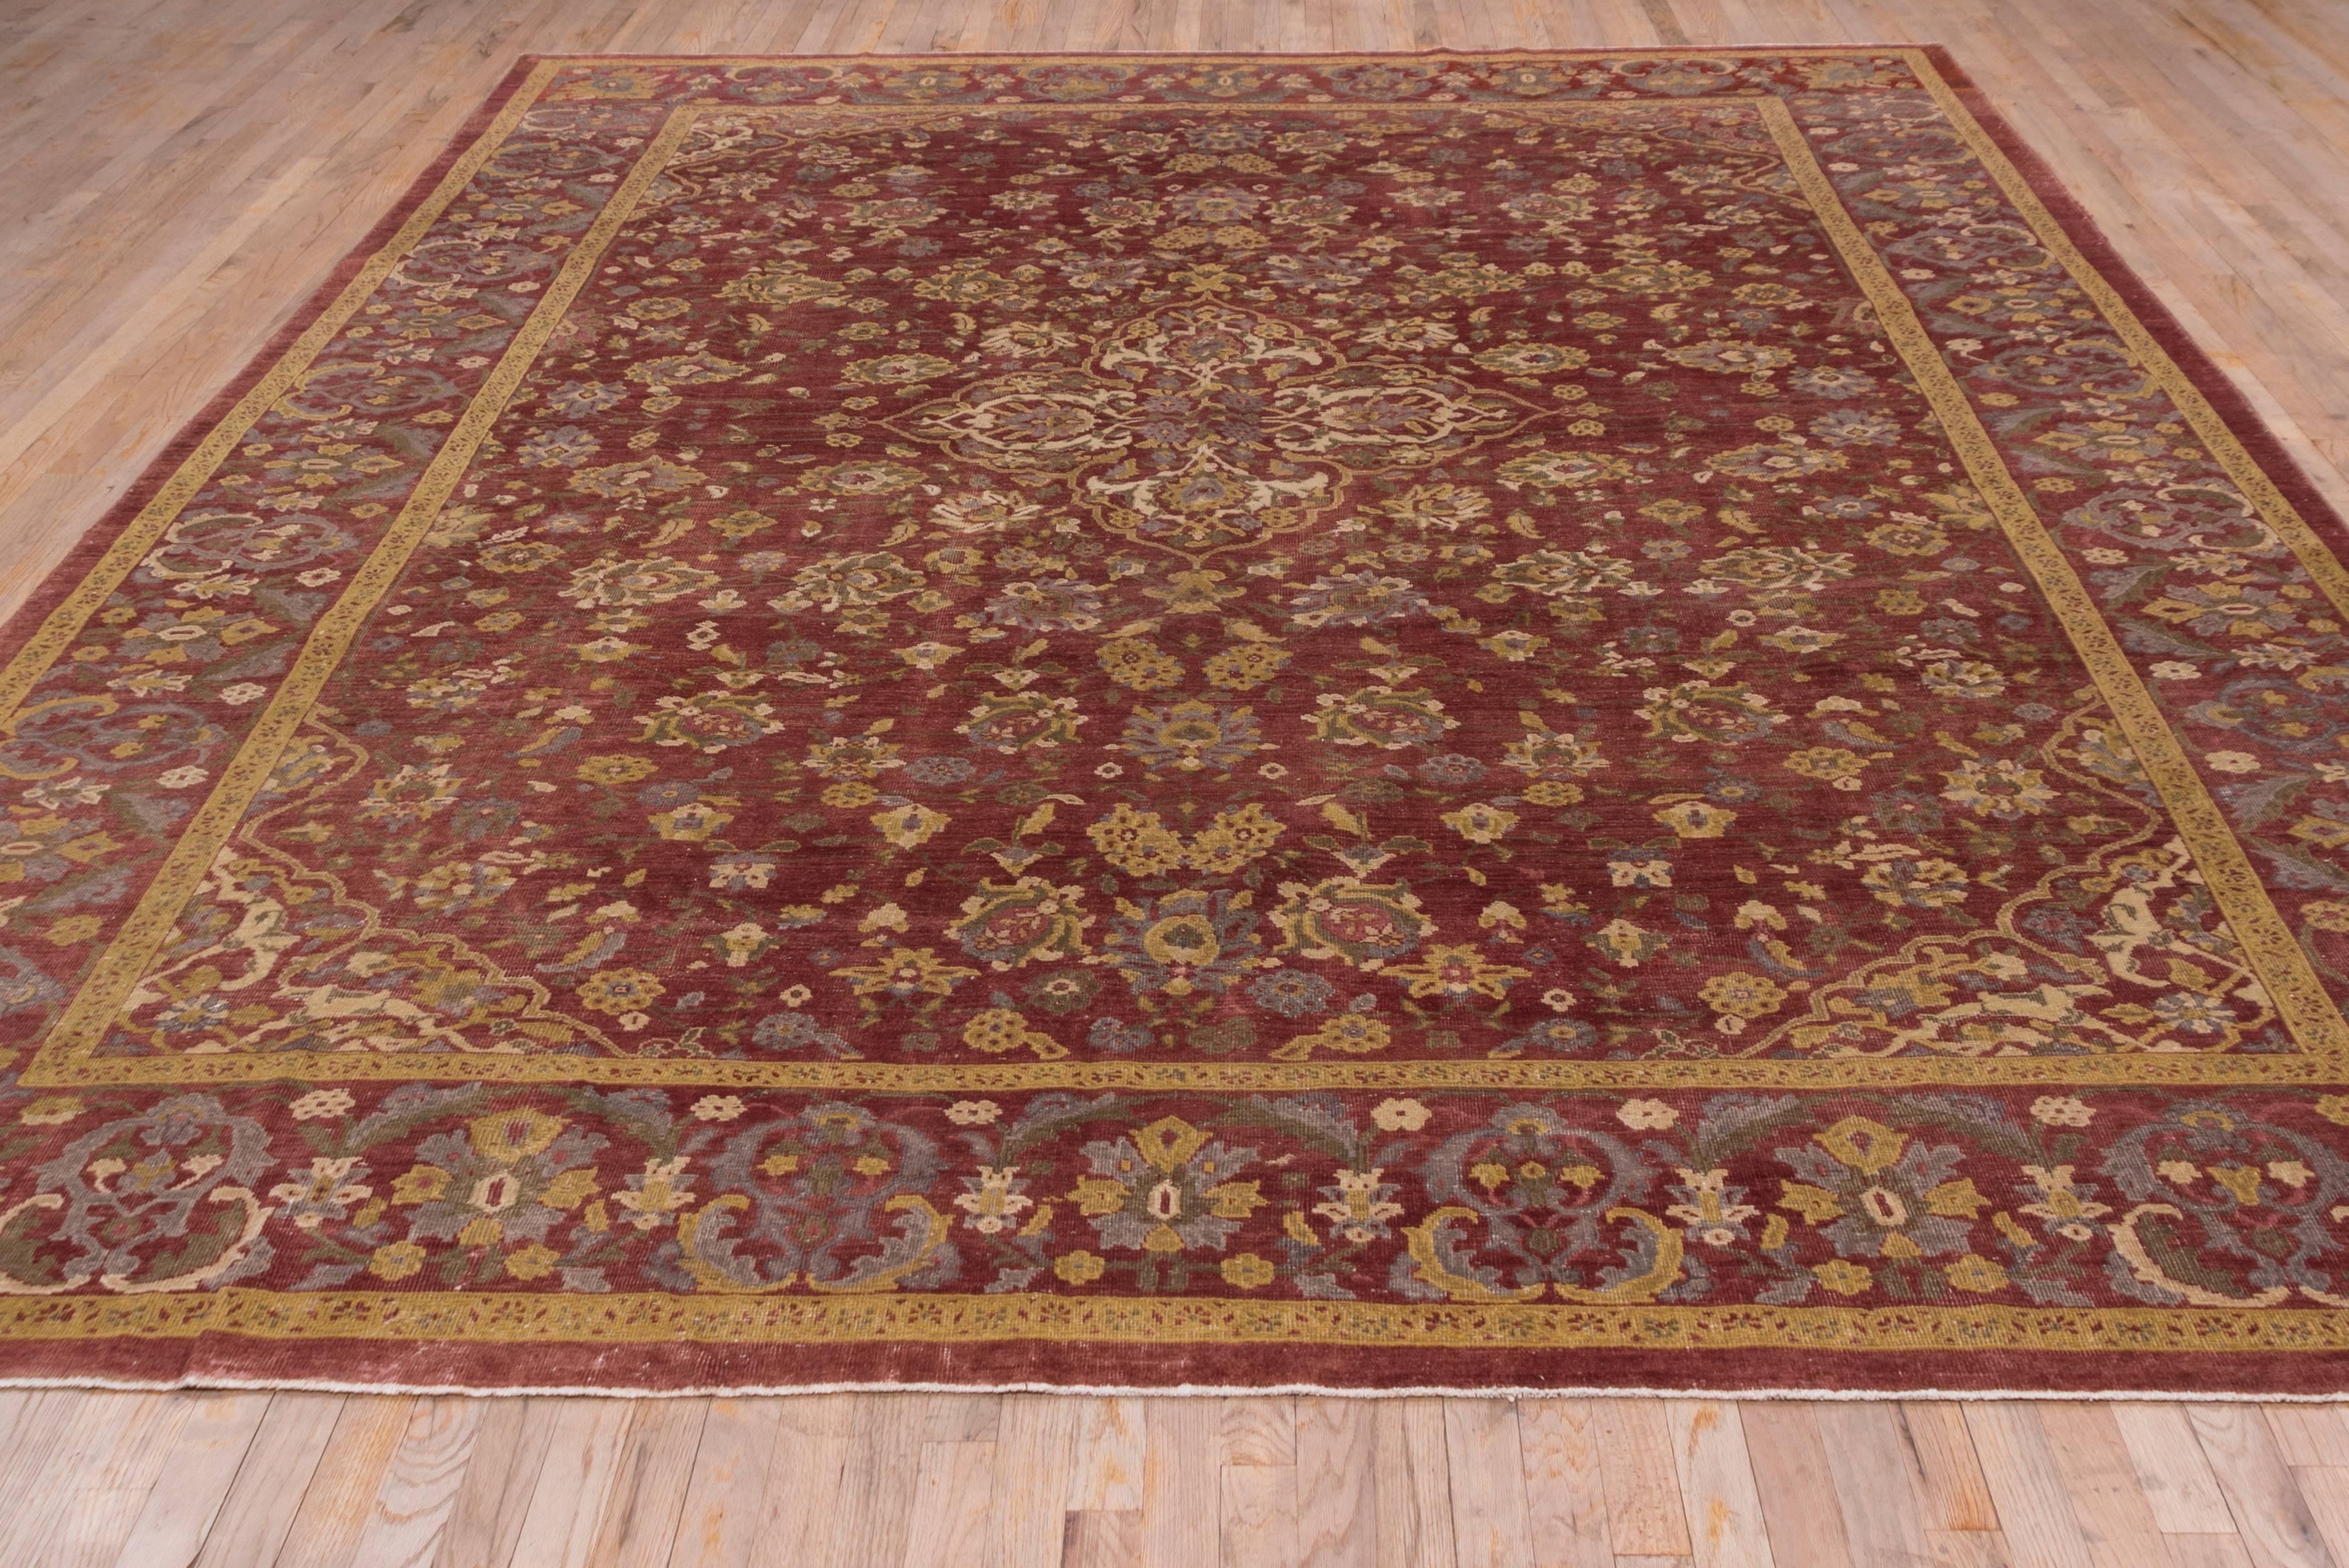 Persian Antique Mahal Carpet, Circa 1920s, Red Field